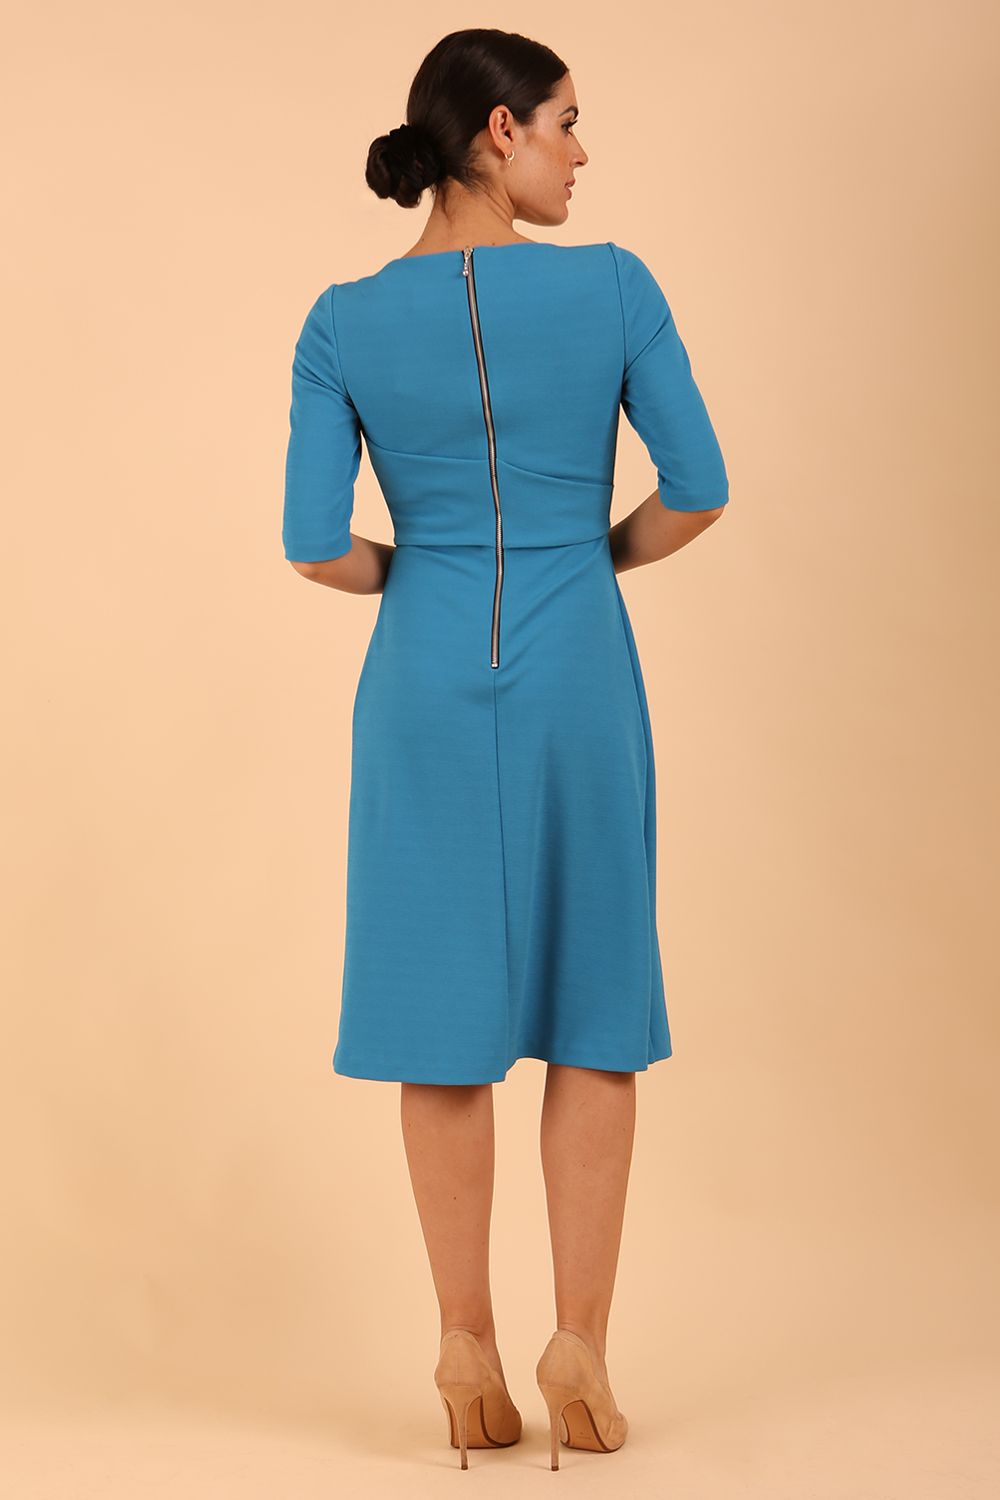 model wearing a Tarifa Elbow Sleeve Swing Dress 3/4 sleeves and knee length in malibu blue colour back